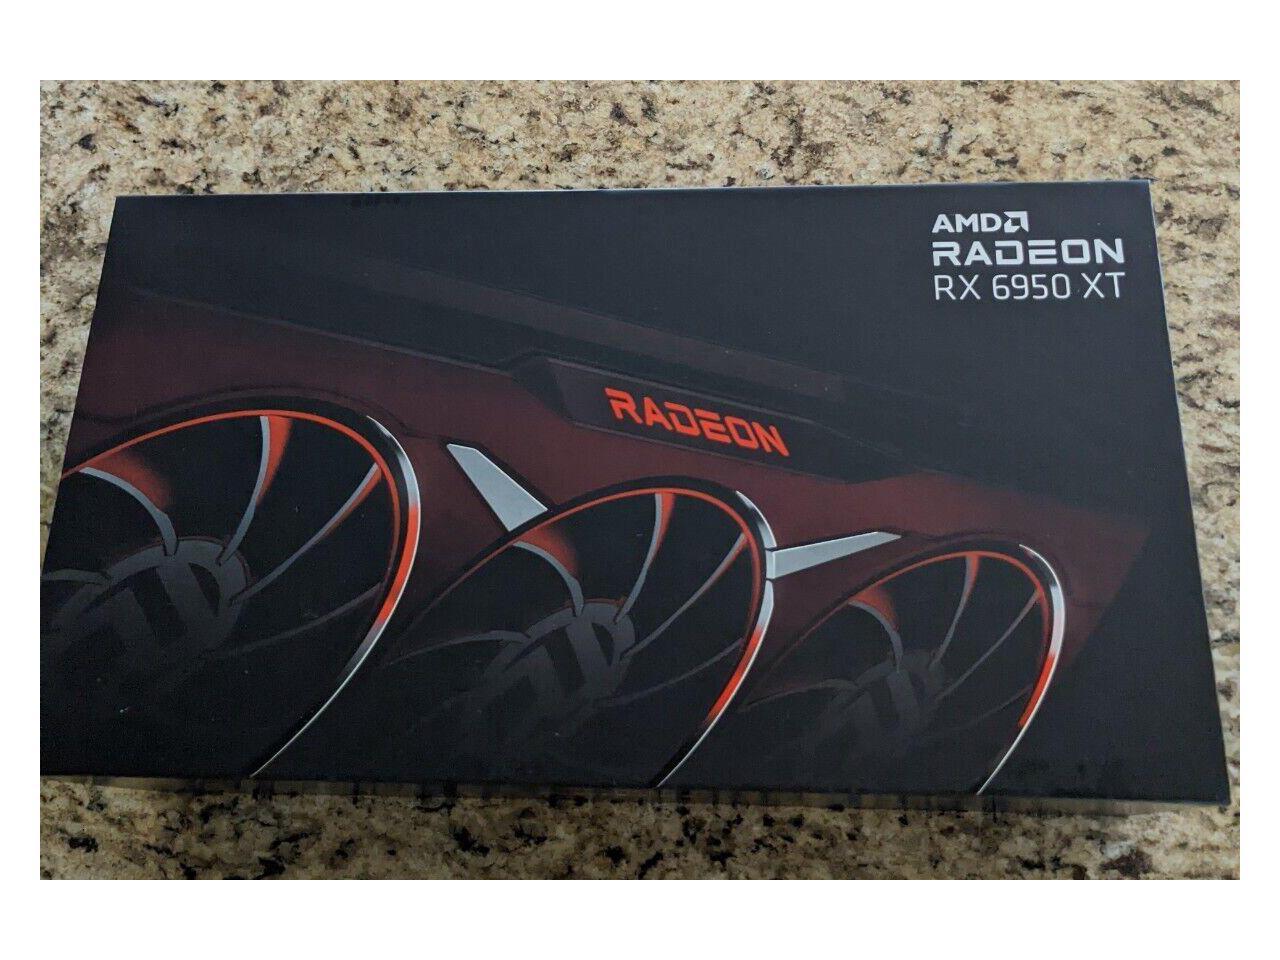 ASUS AMD RADEON RX 6950 XT Gaming Graphics Card, 7nm AMD RDNA2 